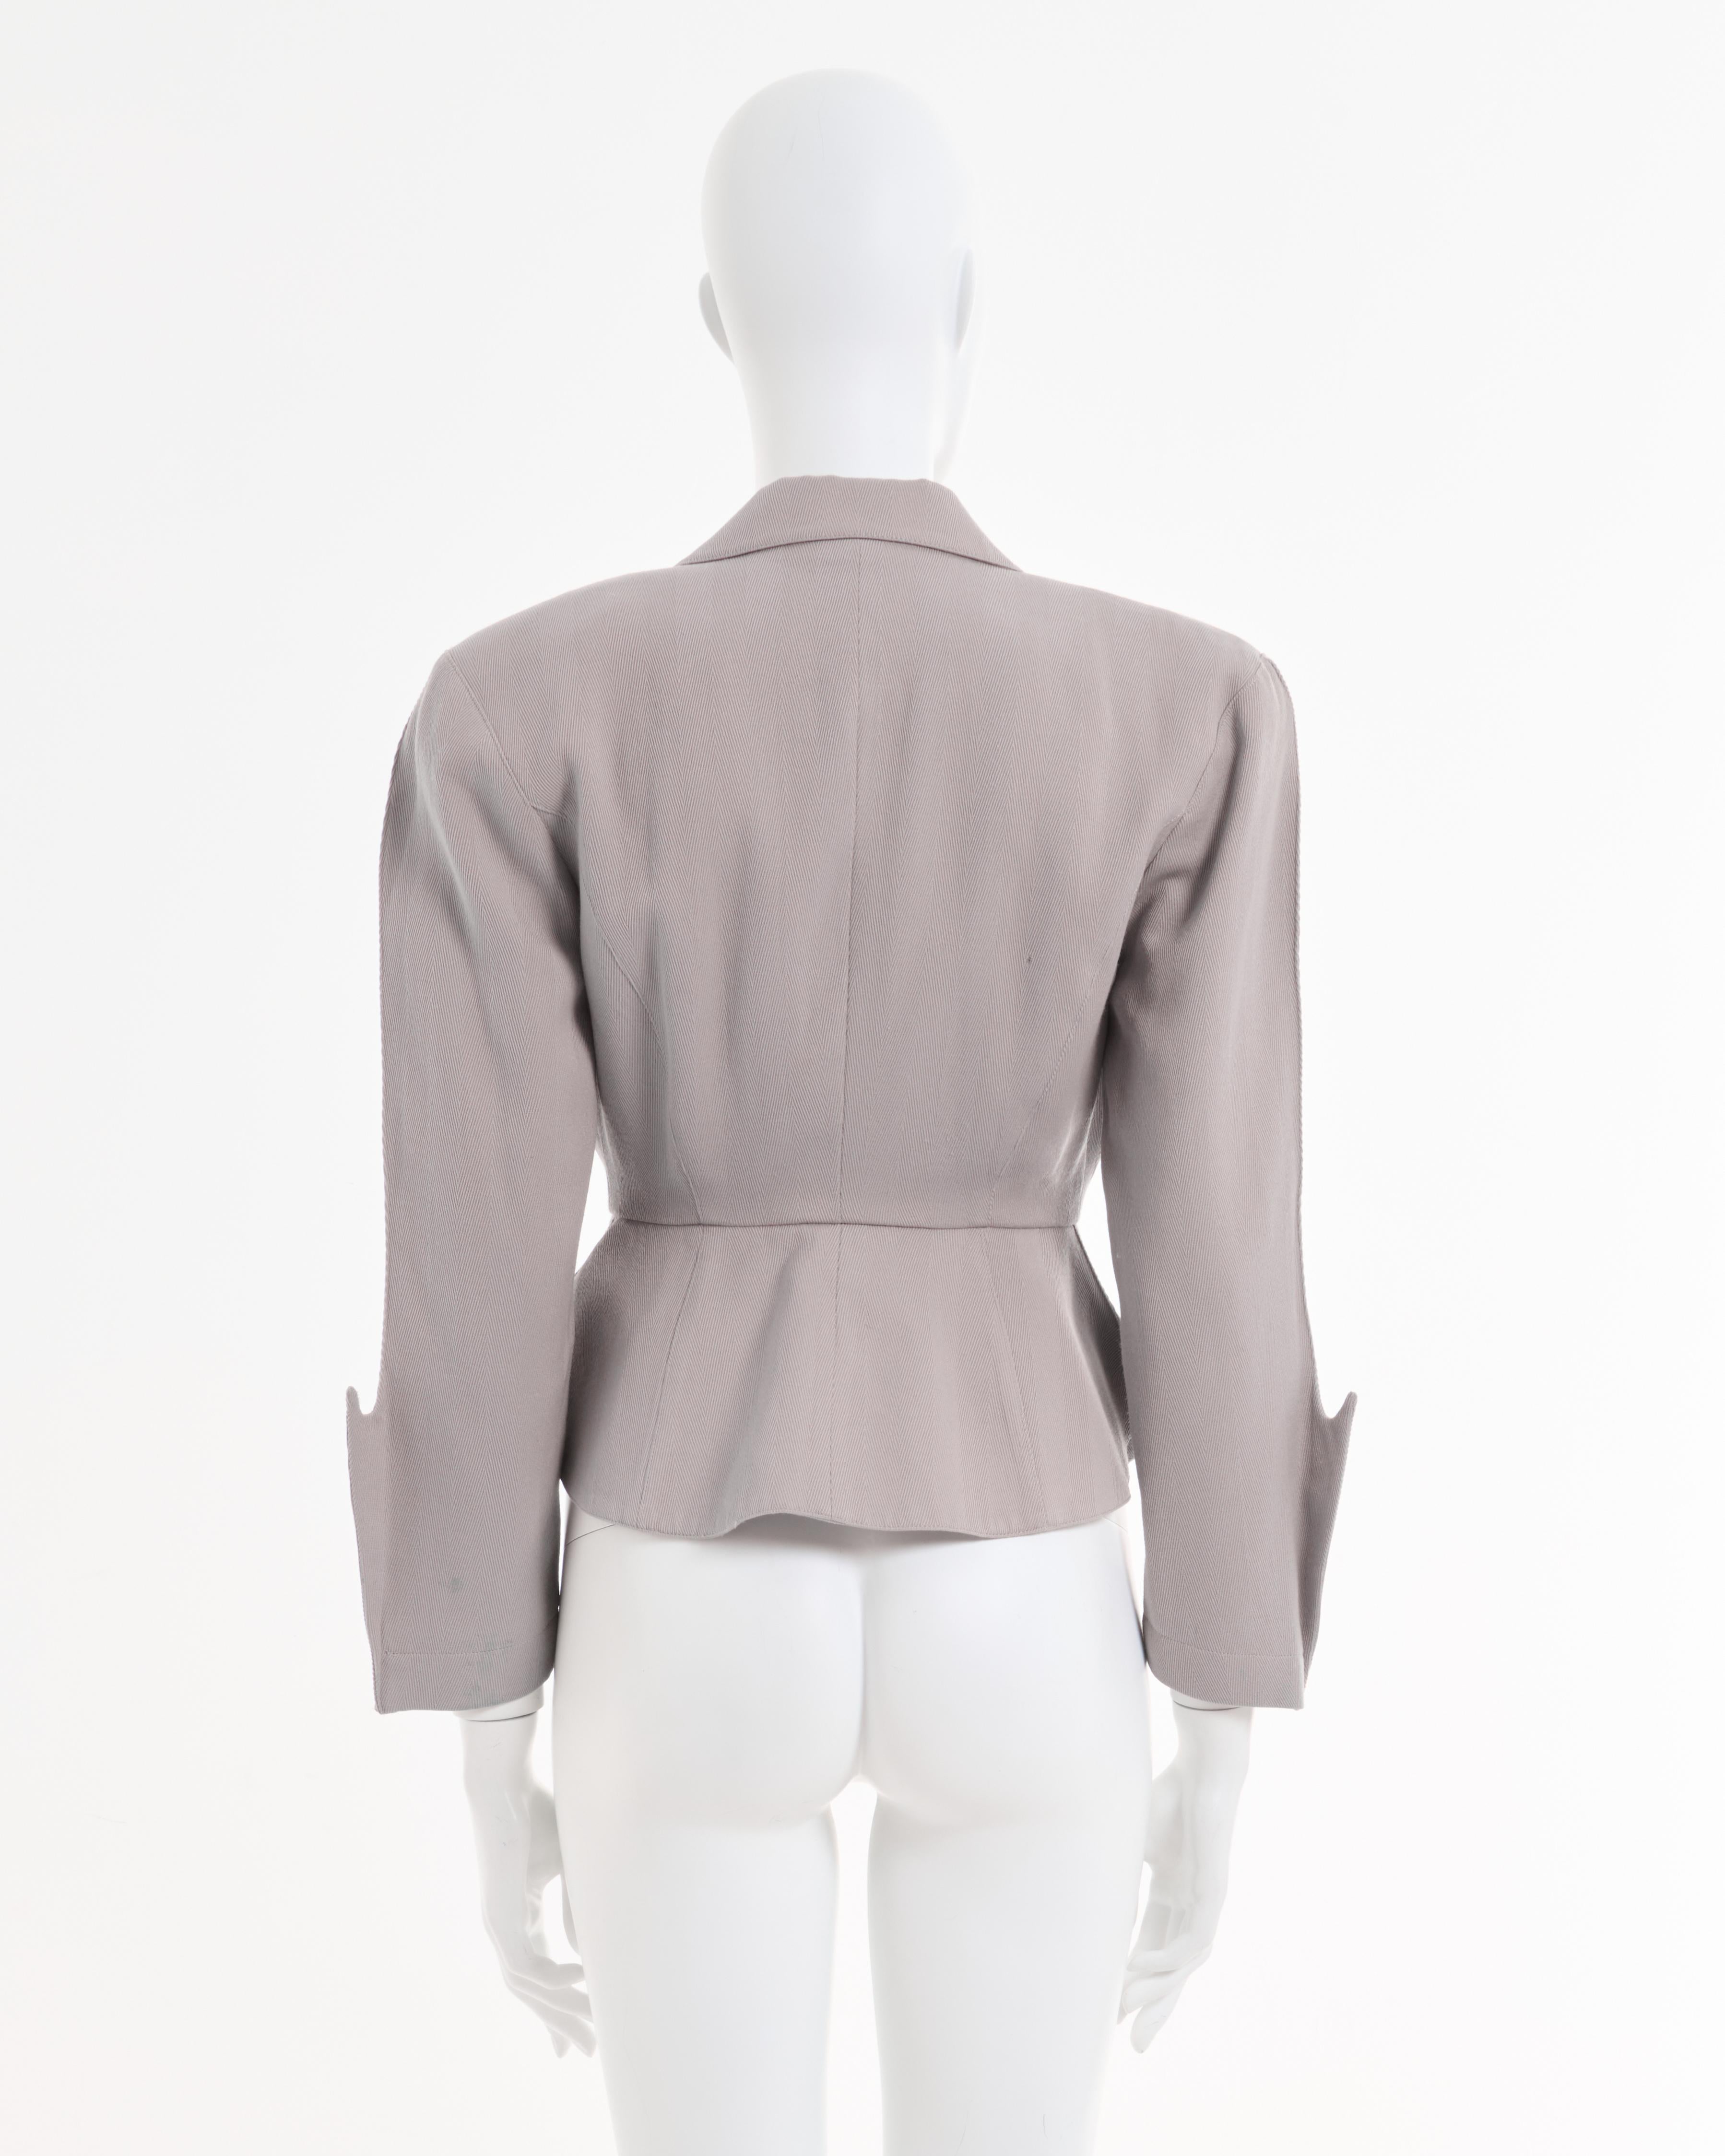 Women's Thierry Mugler S/S 1989 'Les Atlantes' Beige shaped sculptural blazer jacket For Sale